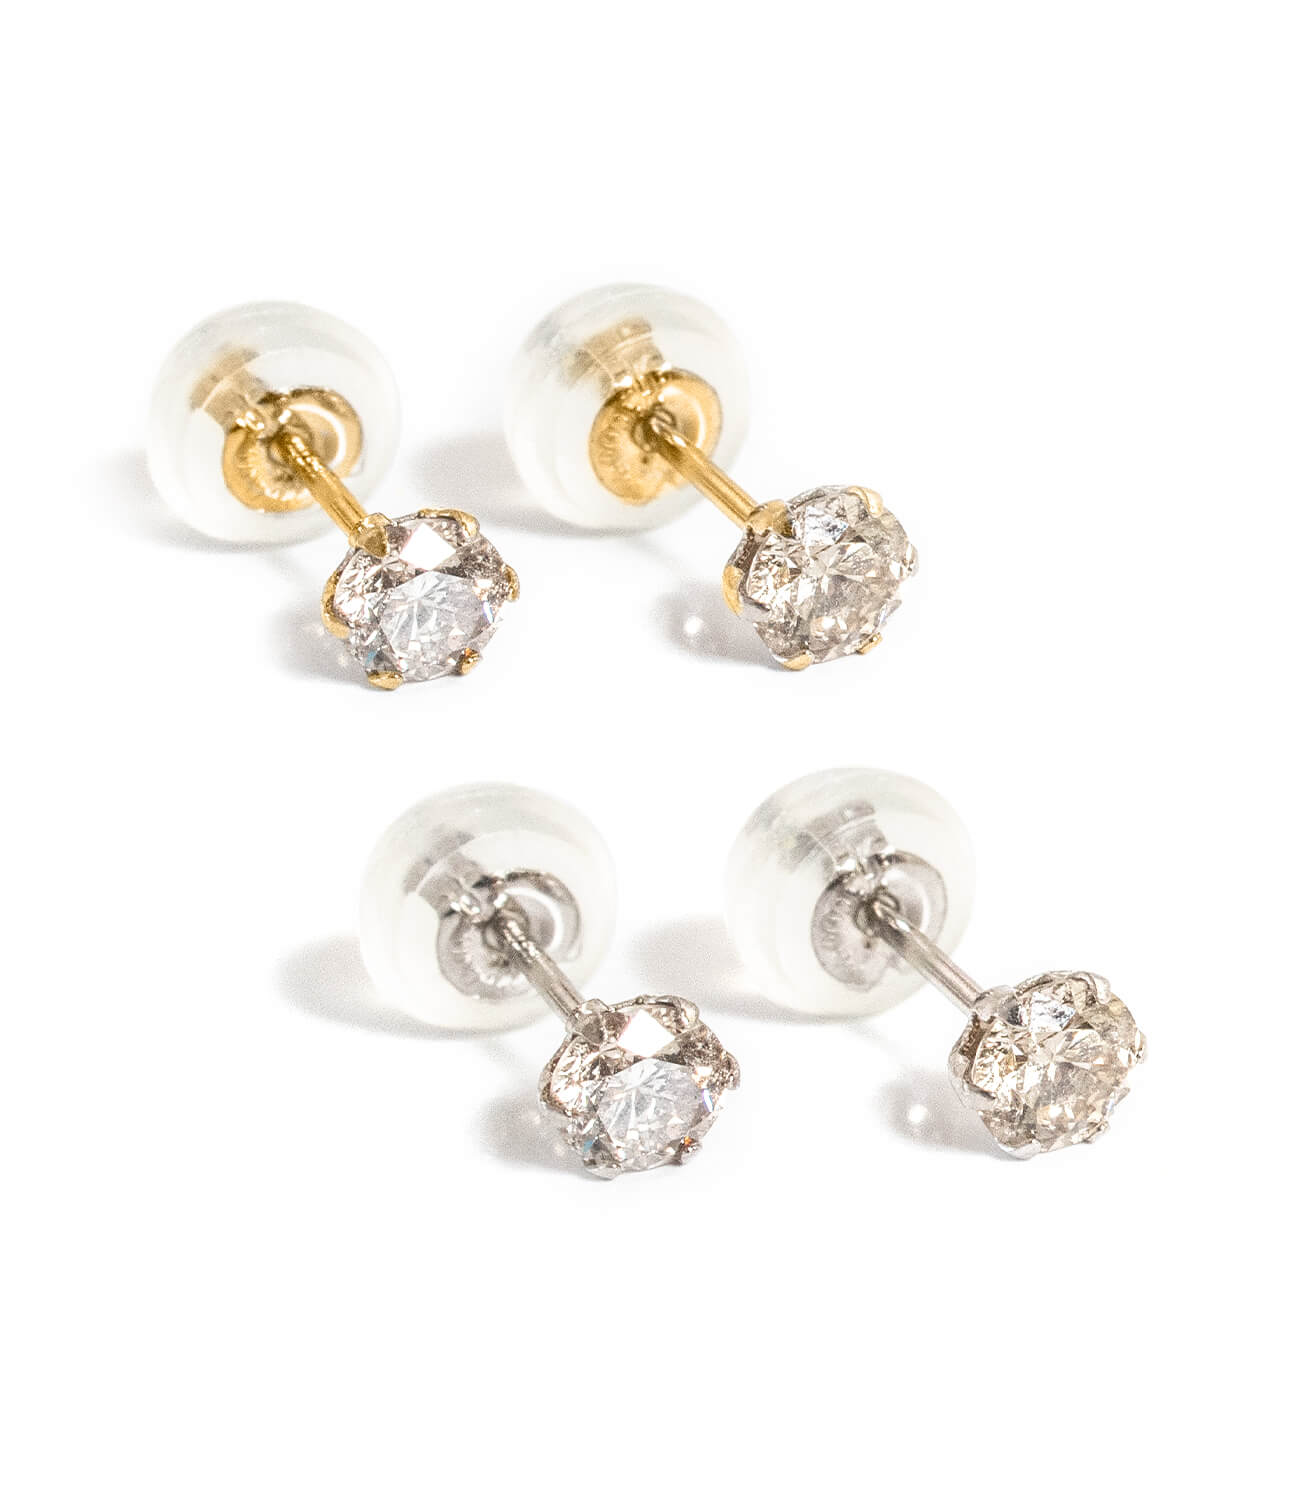 H&C Cut Pt900 Precious Diamond Stud Earrings | EDELE – Ops. Jewelry